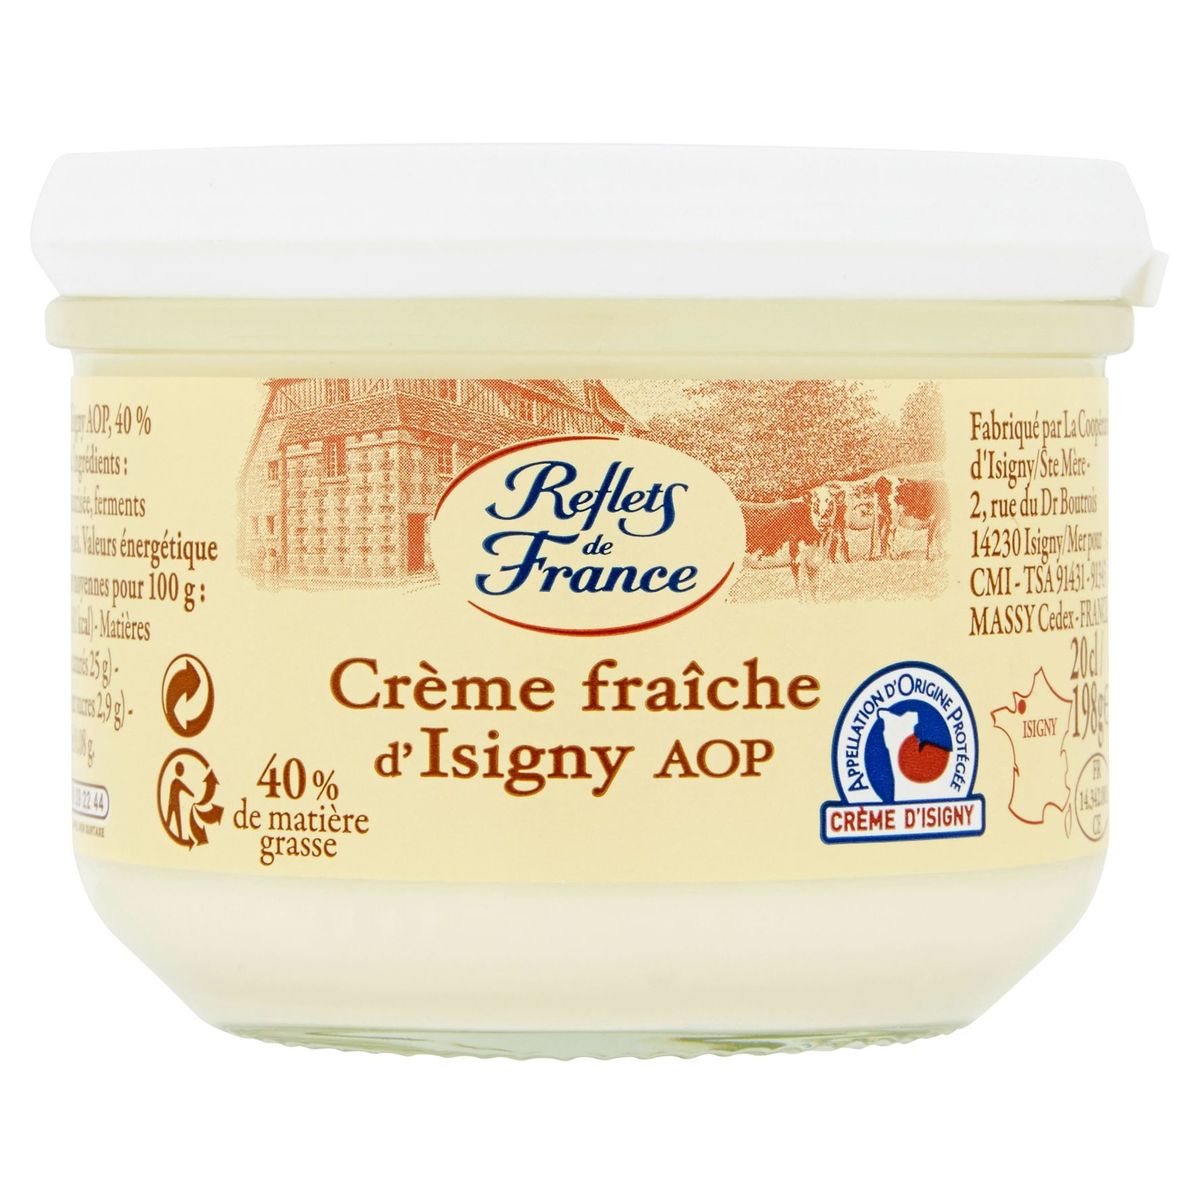 Reflets de France Crème Fraîche d'Isigny AOP 198 g